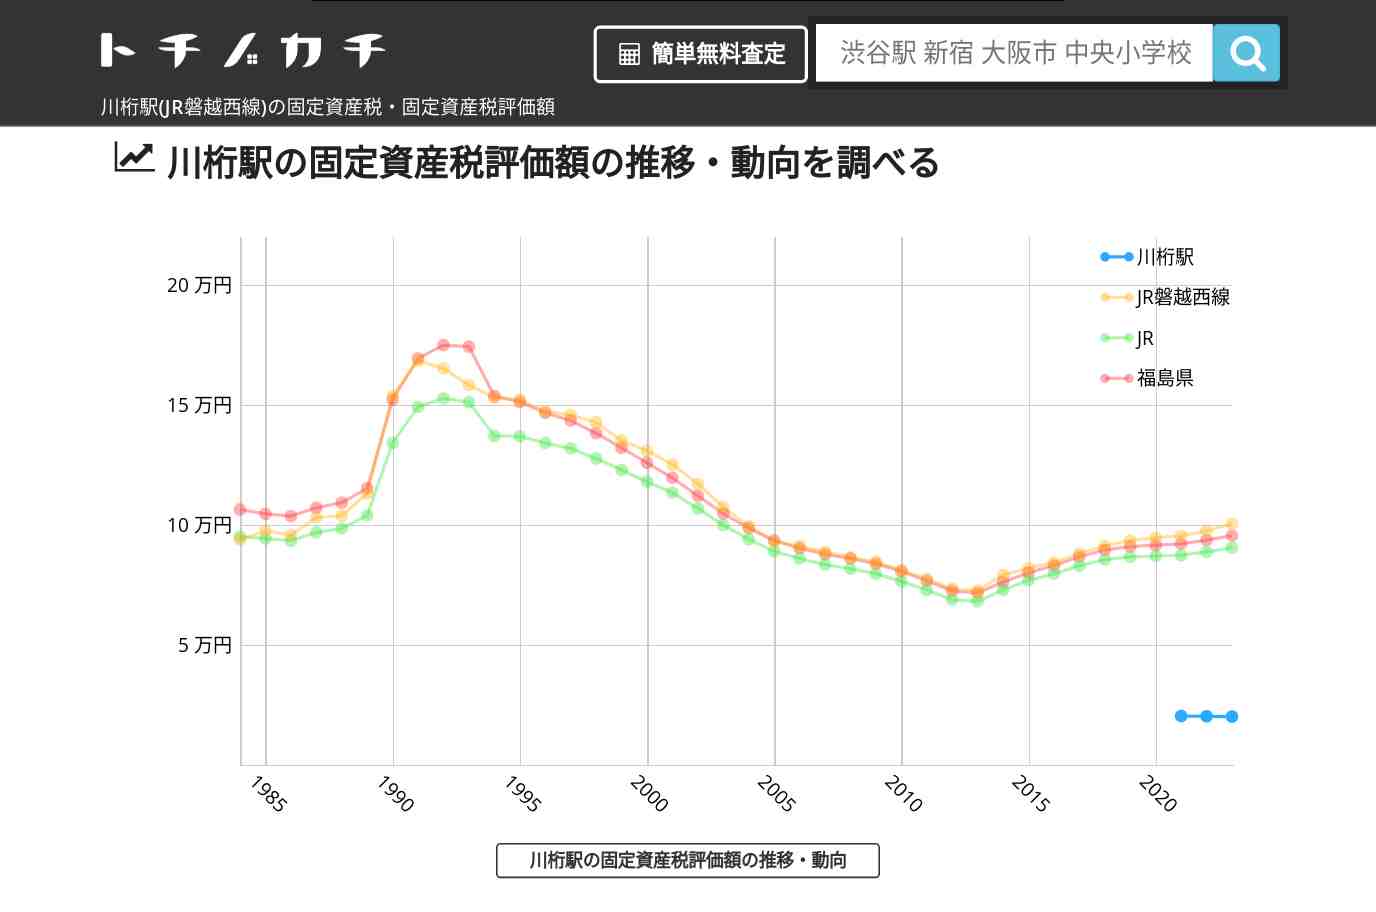 川桁駅(JR磐越西線)の固定資産税・固定資産税評価額 | トチノカチ